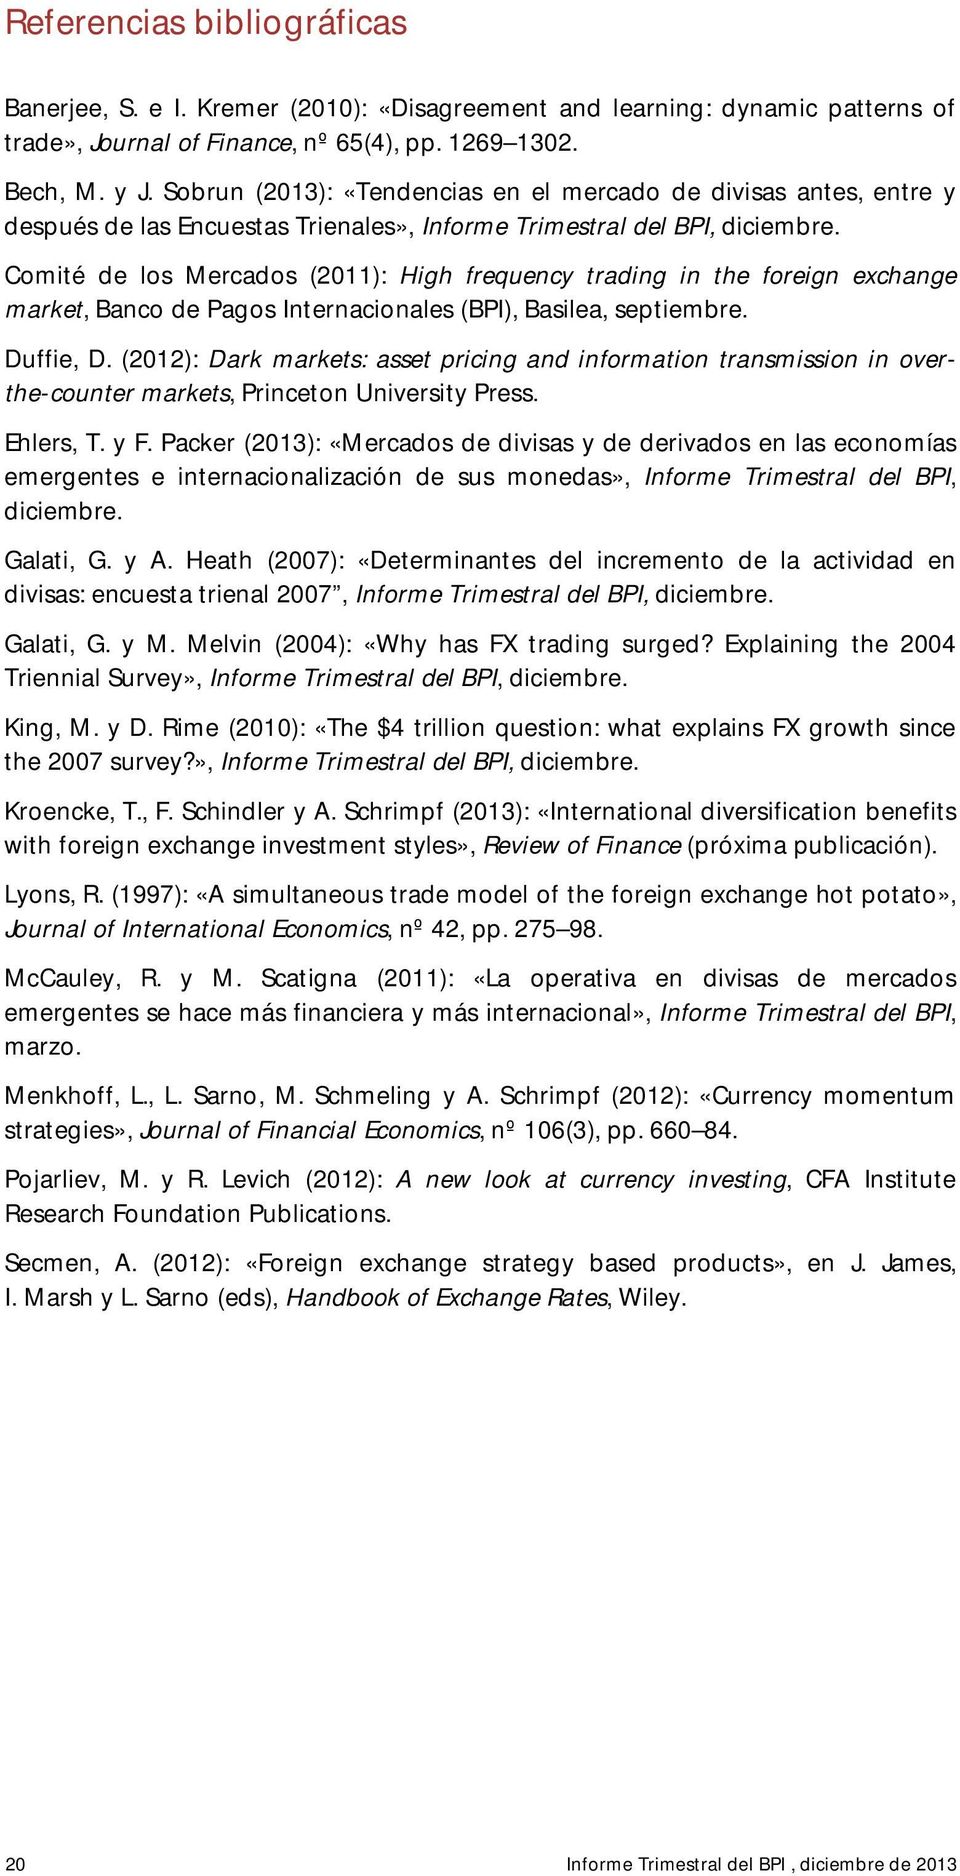 Comité de los Mercados (211): High frequency trading in the foreign exchange market, Banco de Pagos Internacionales (BPI), Basilea, septiembre. Duffie, D.